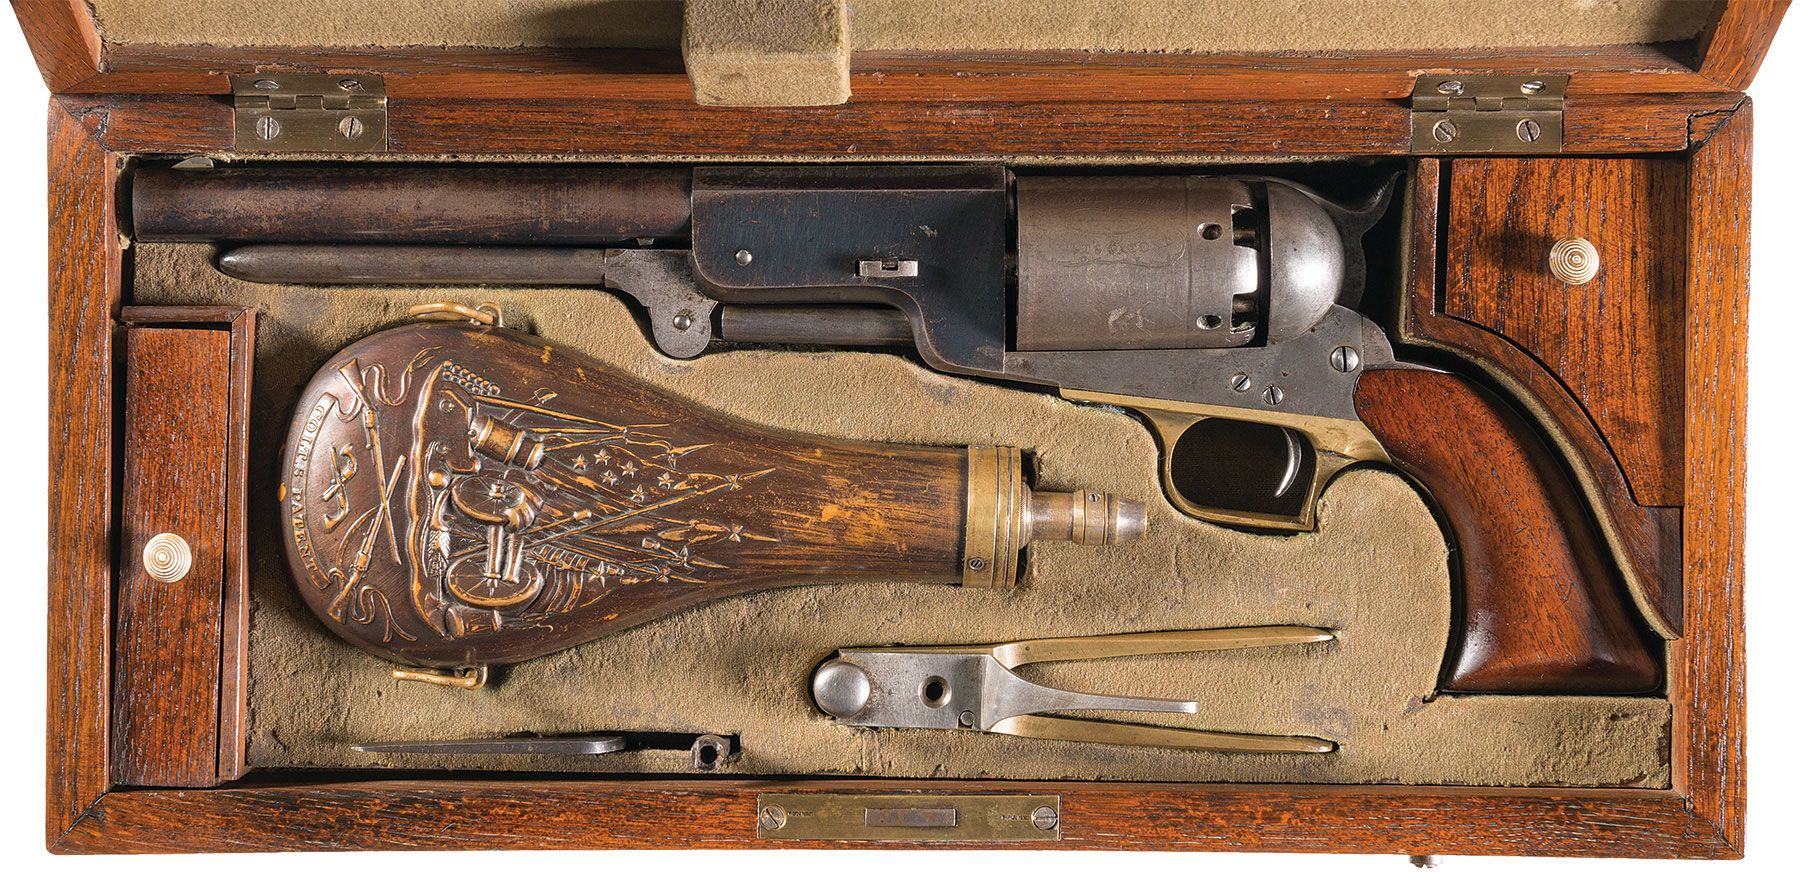 Cased Colt Civilian Walker Revolver, “The Danish Sea Captain Walker”